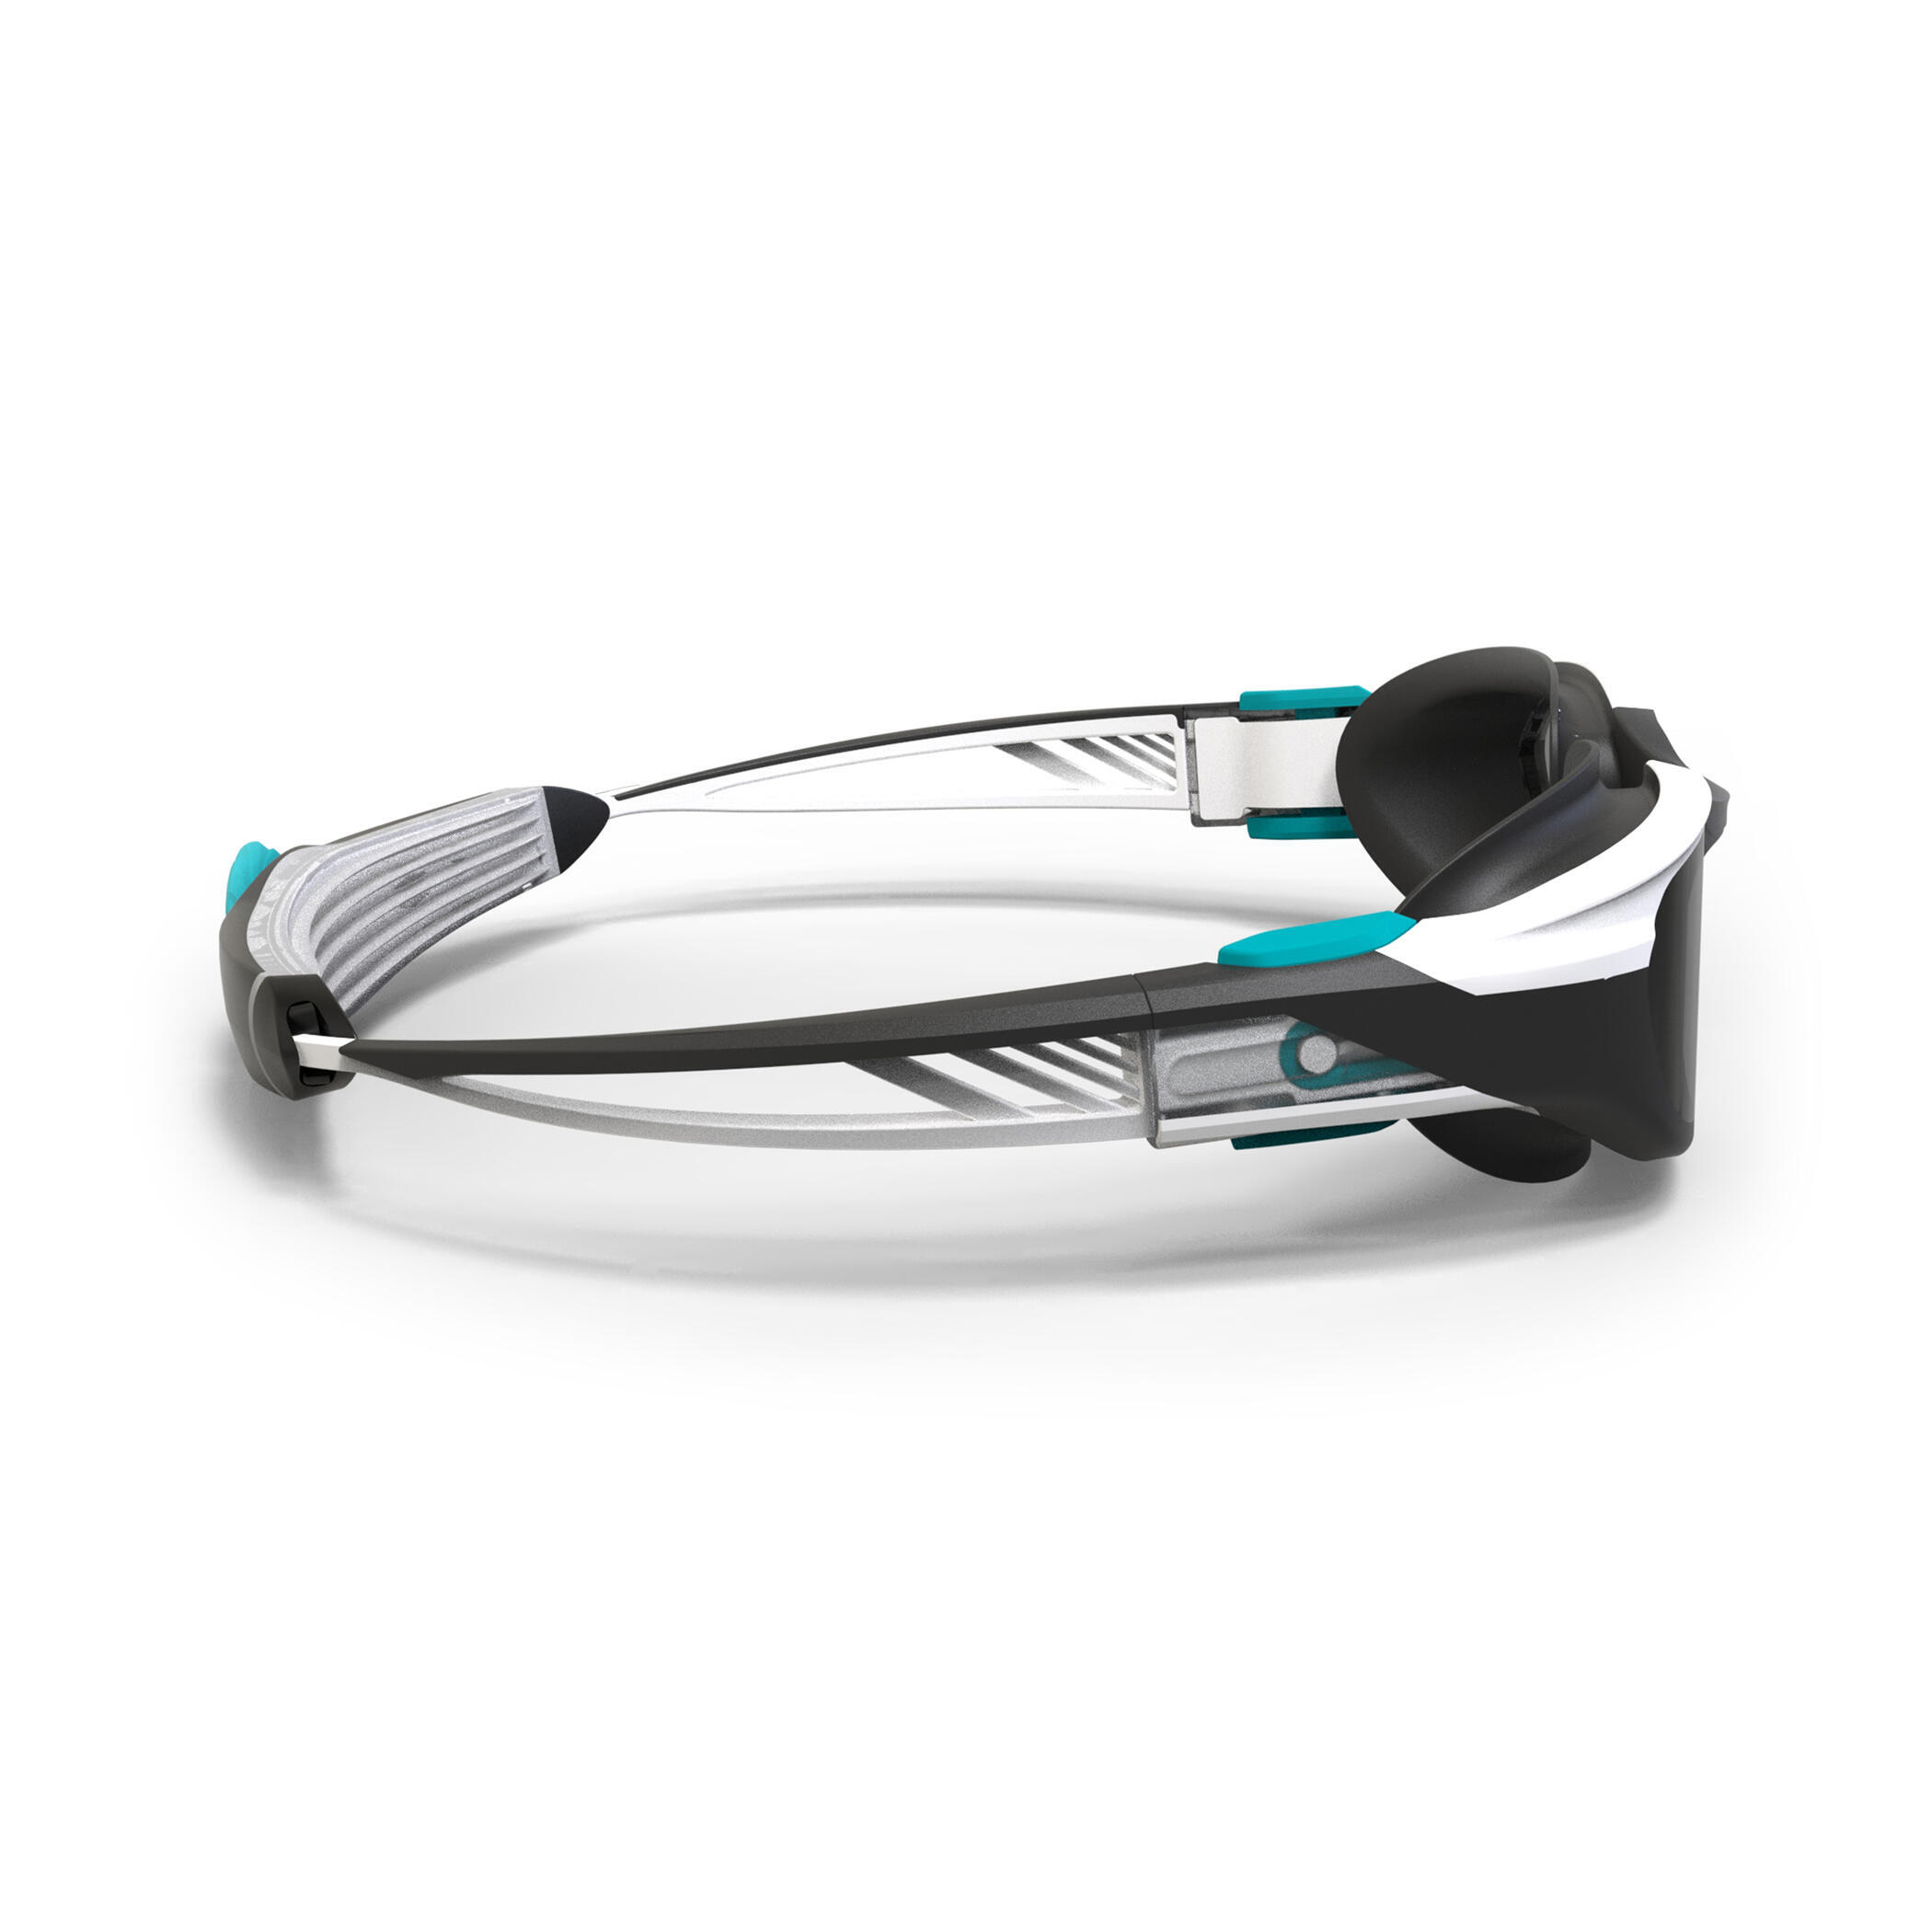 Swimming goggles - TURN Size S - Smoked Lenses - White/Black/Turquoise 2/7